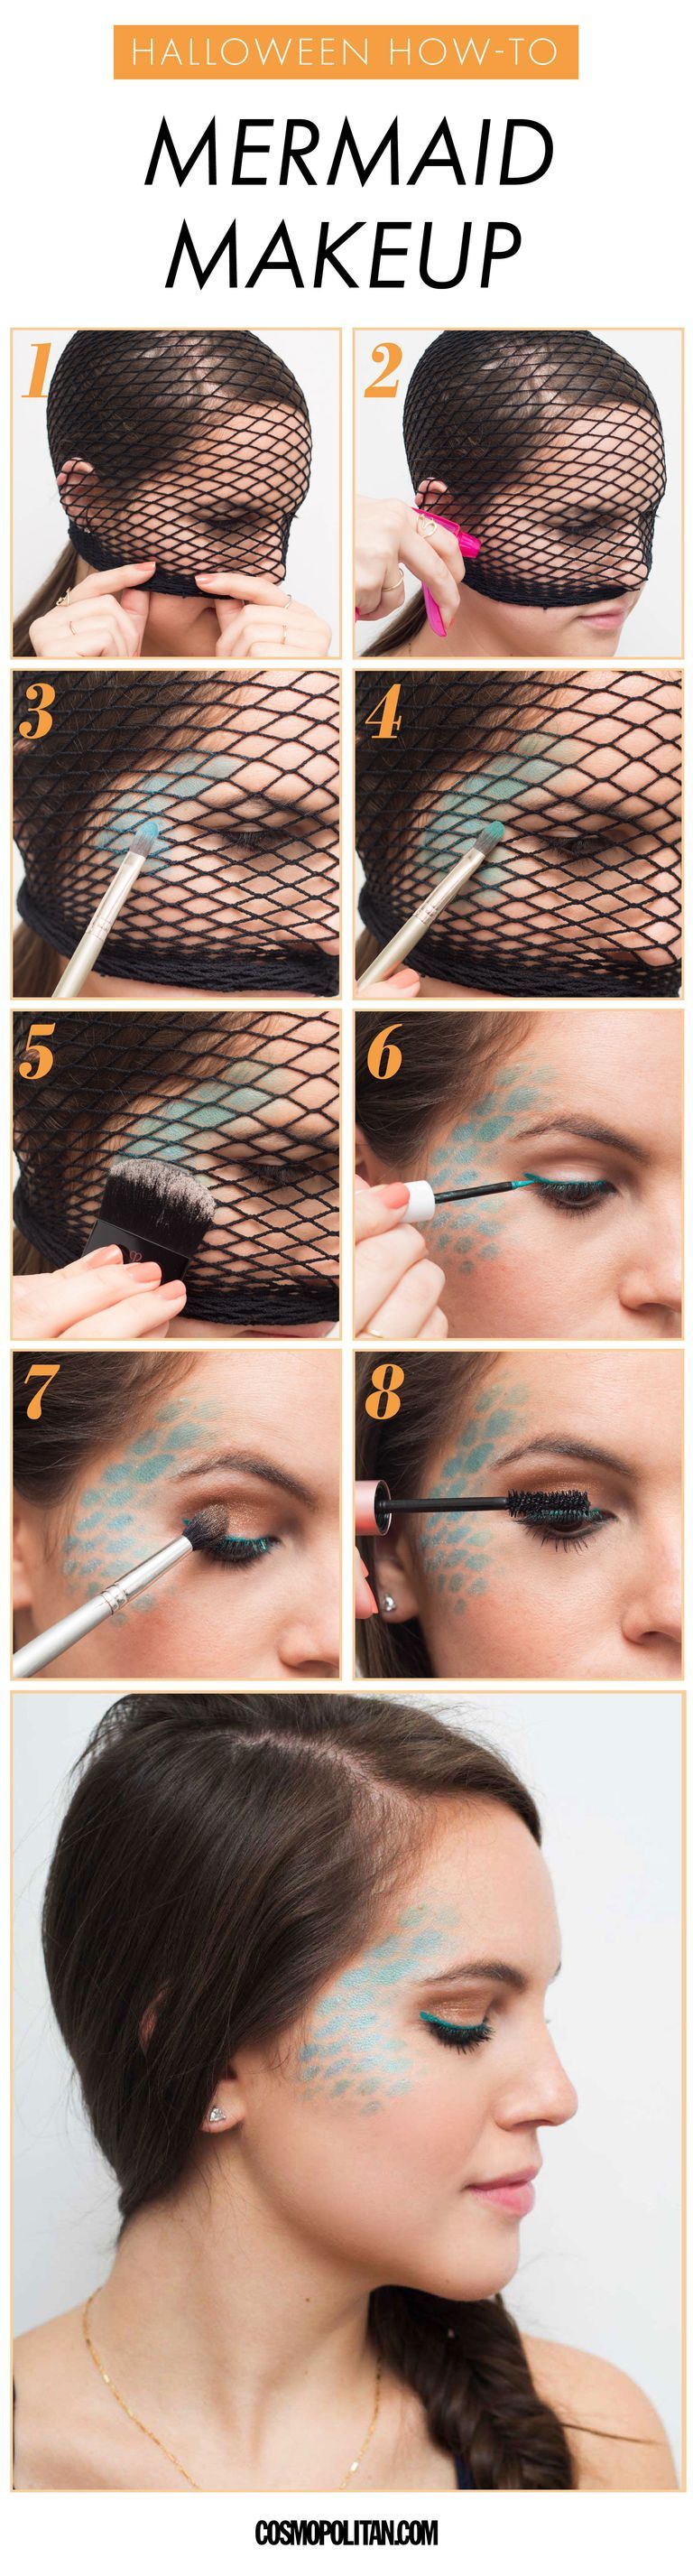 Mermaid Makeup Tips and Tricks